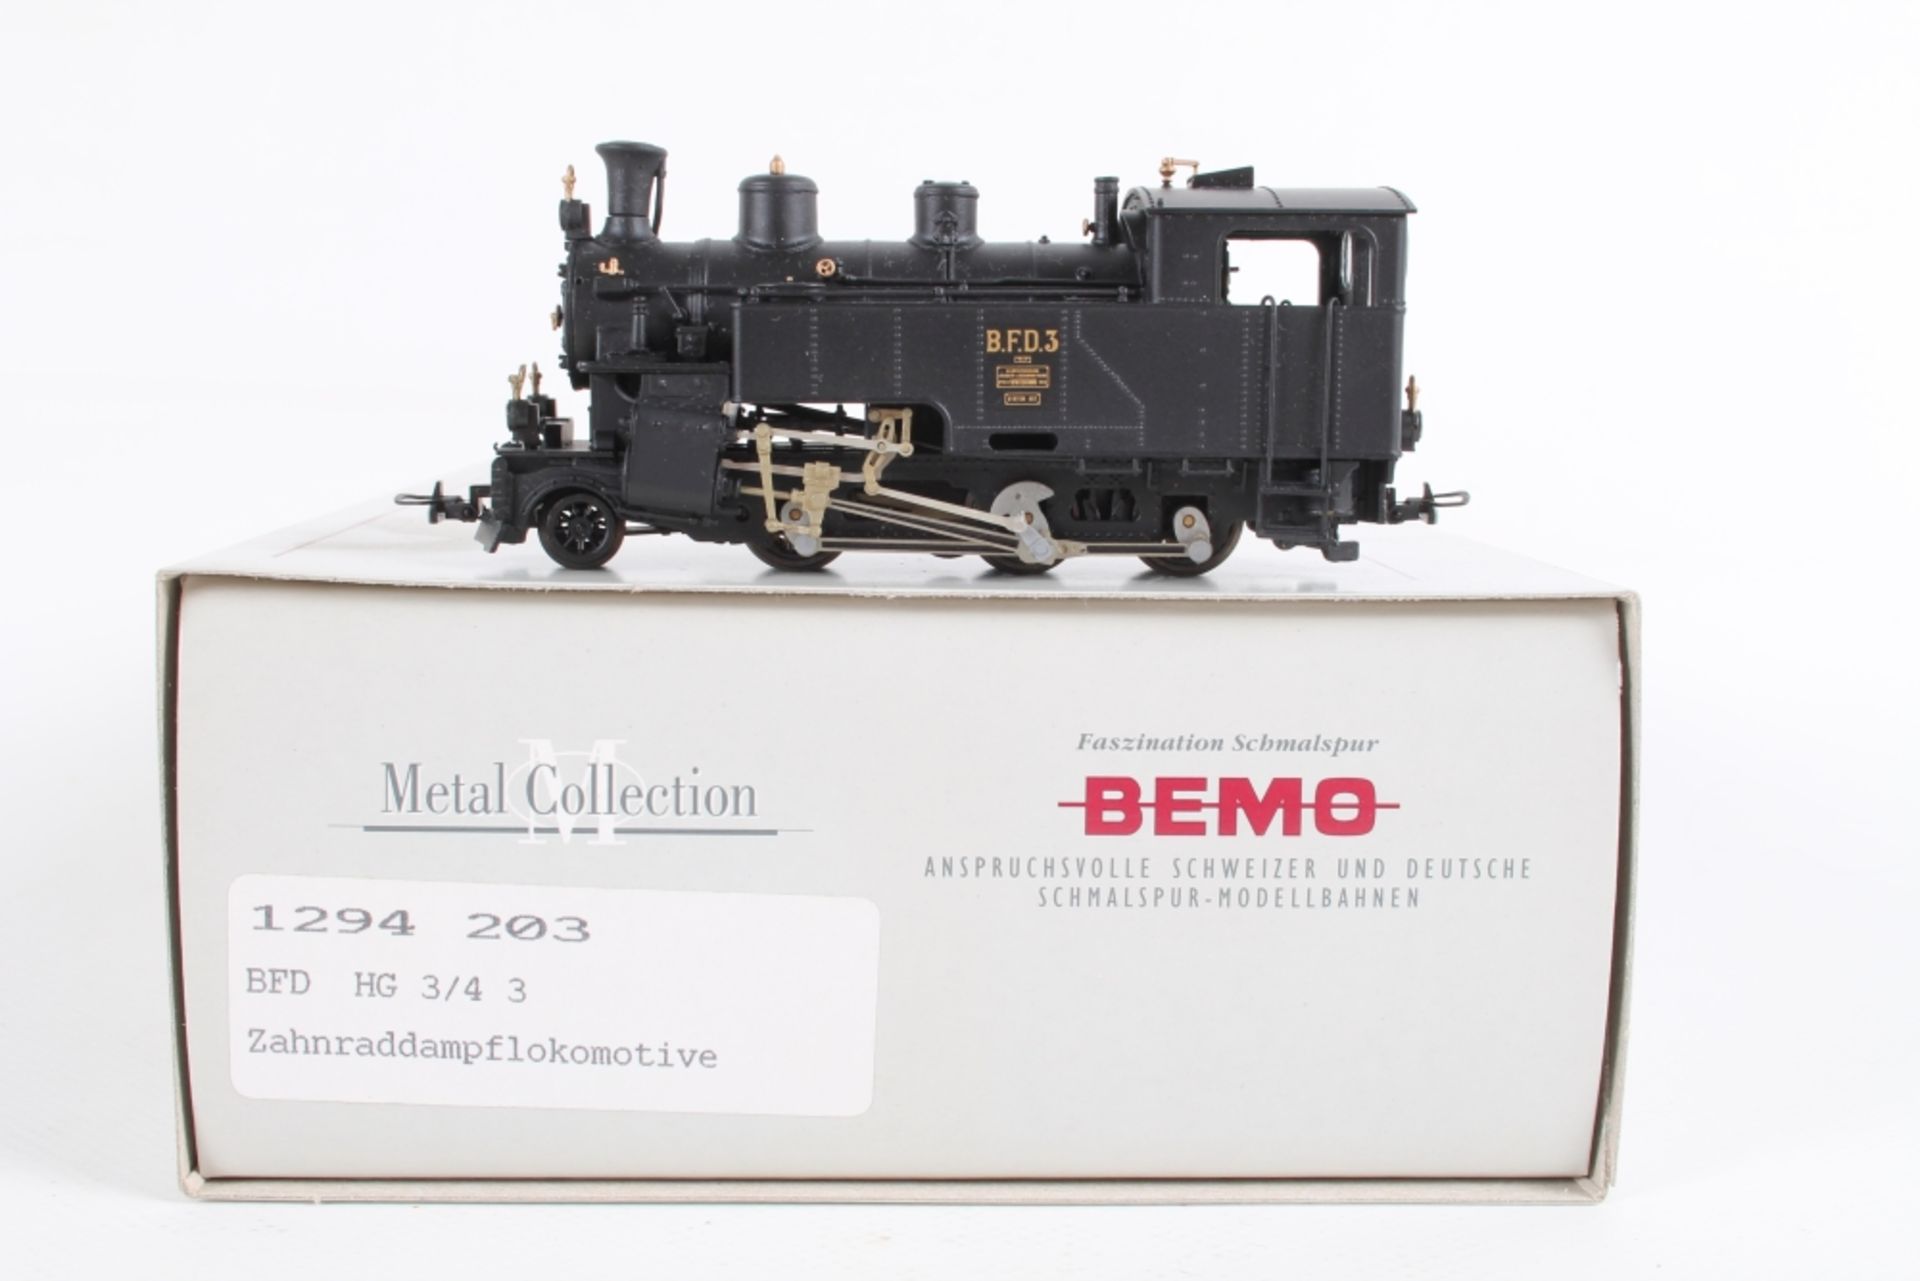 Bemo Metal Collection, 1294 203 - Image 2 of 2